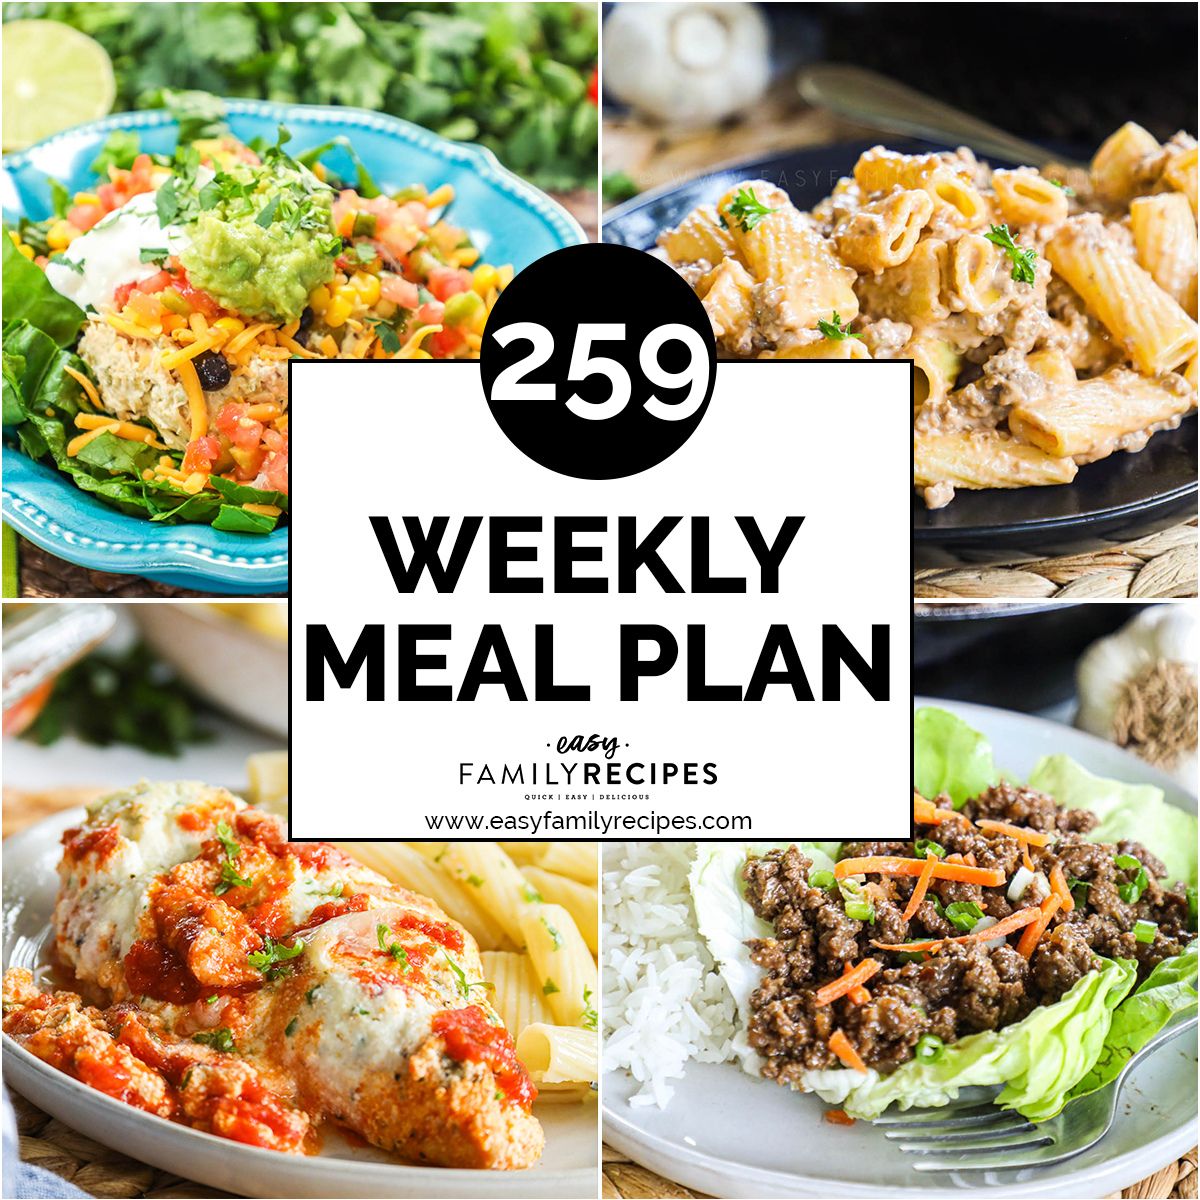 Weekly Meal Plan 259